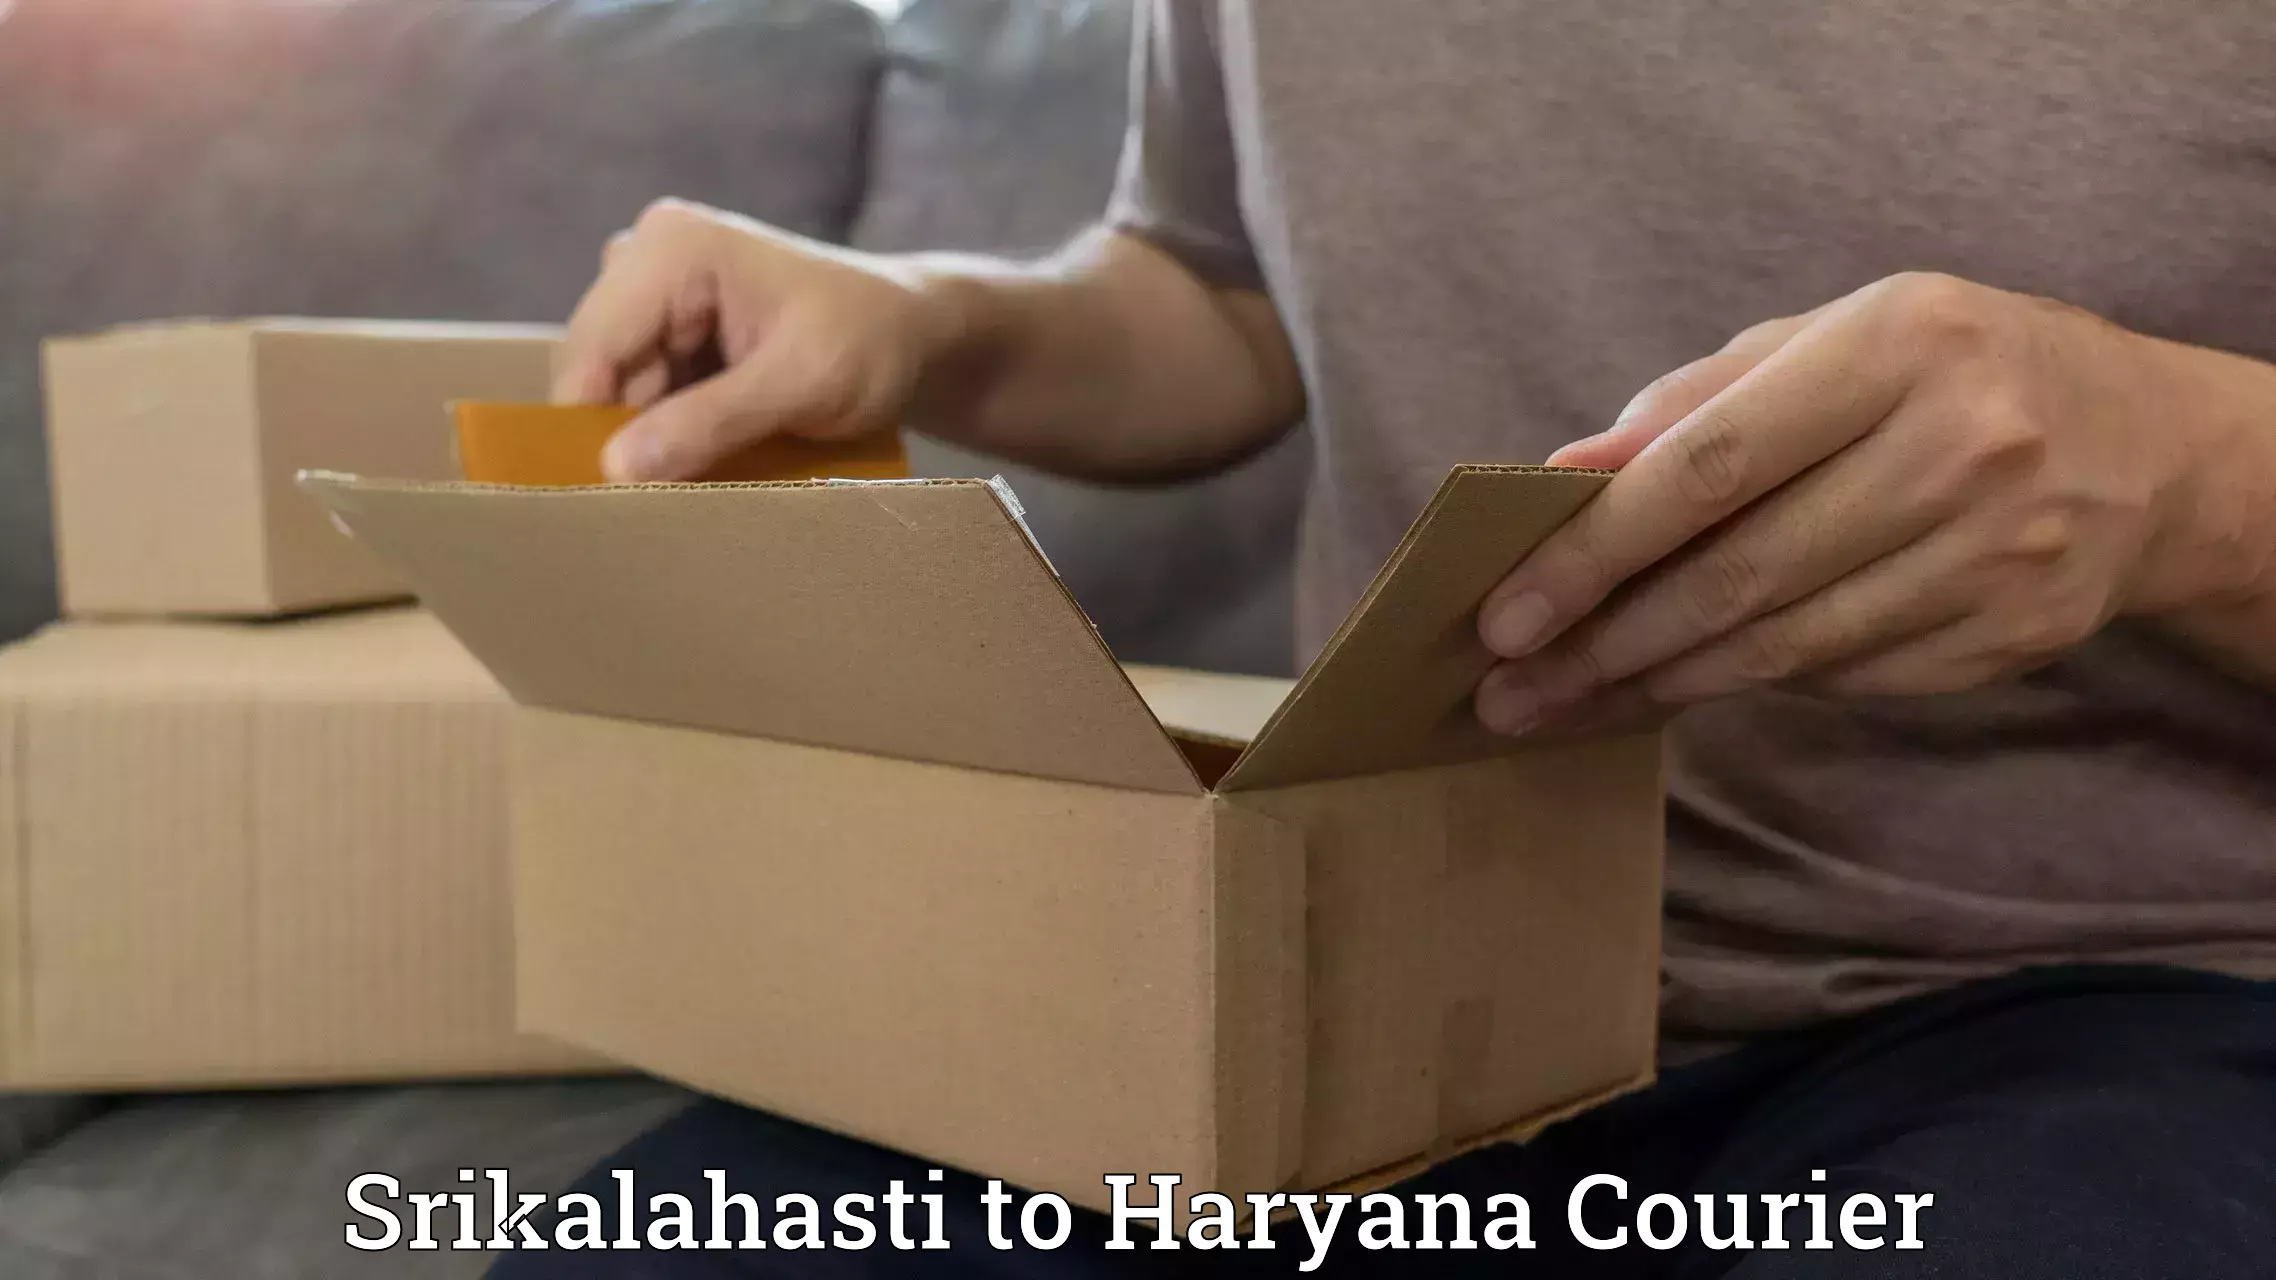 State-of-the-art courier technology Srikalahasti to Hansi